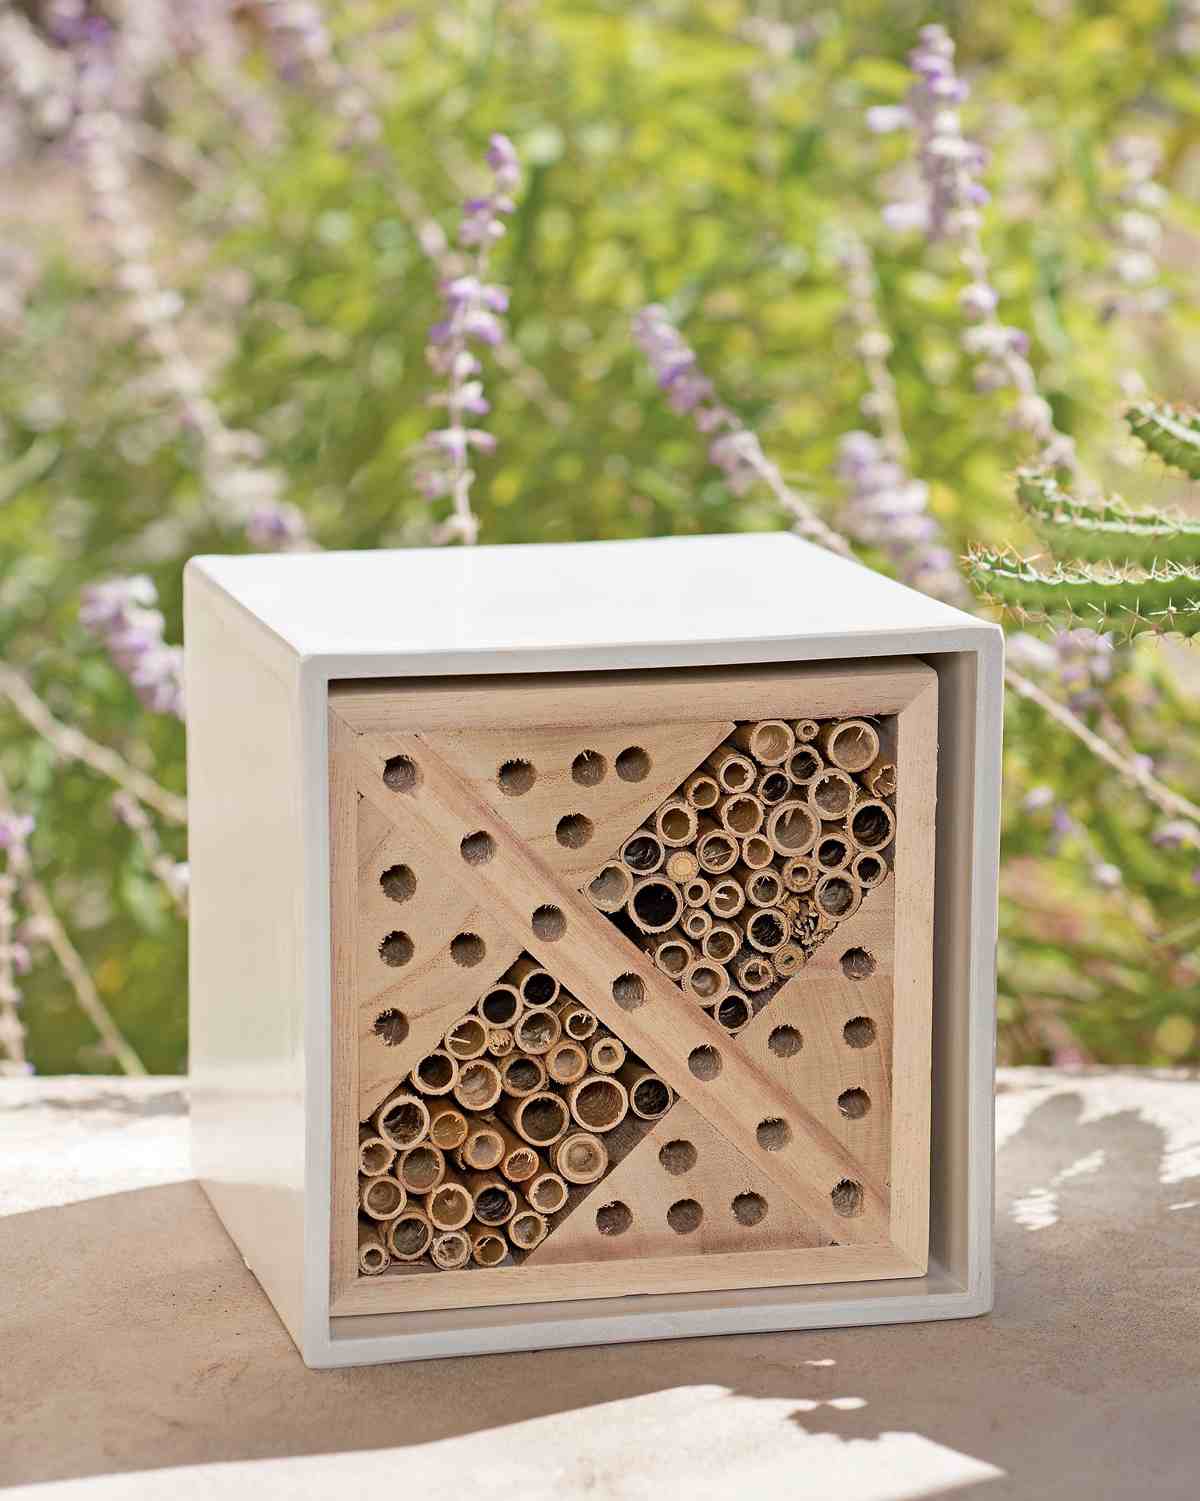 Insektenhotel bauen Marienkäfer Hummel anlocken Mücken bekämpfen